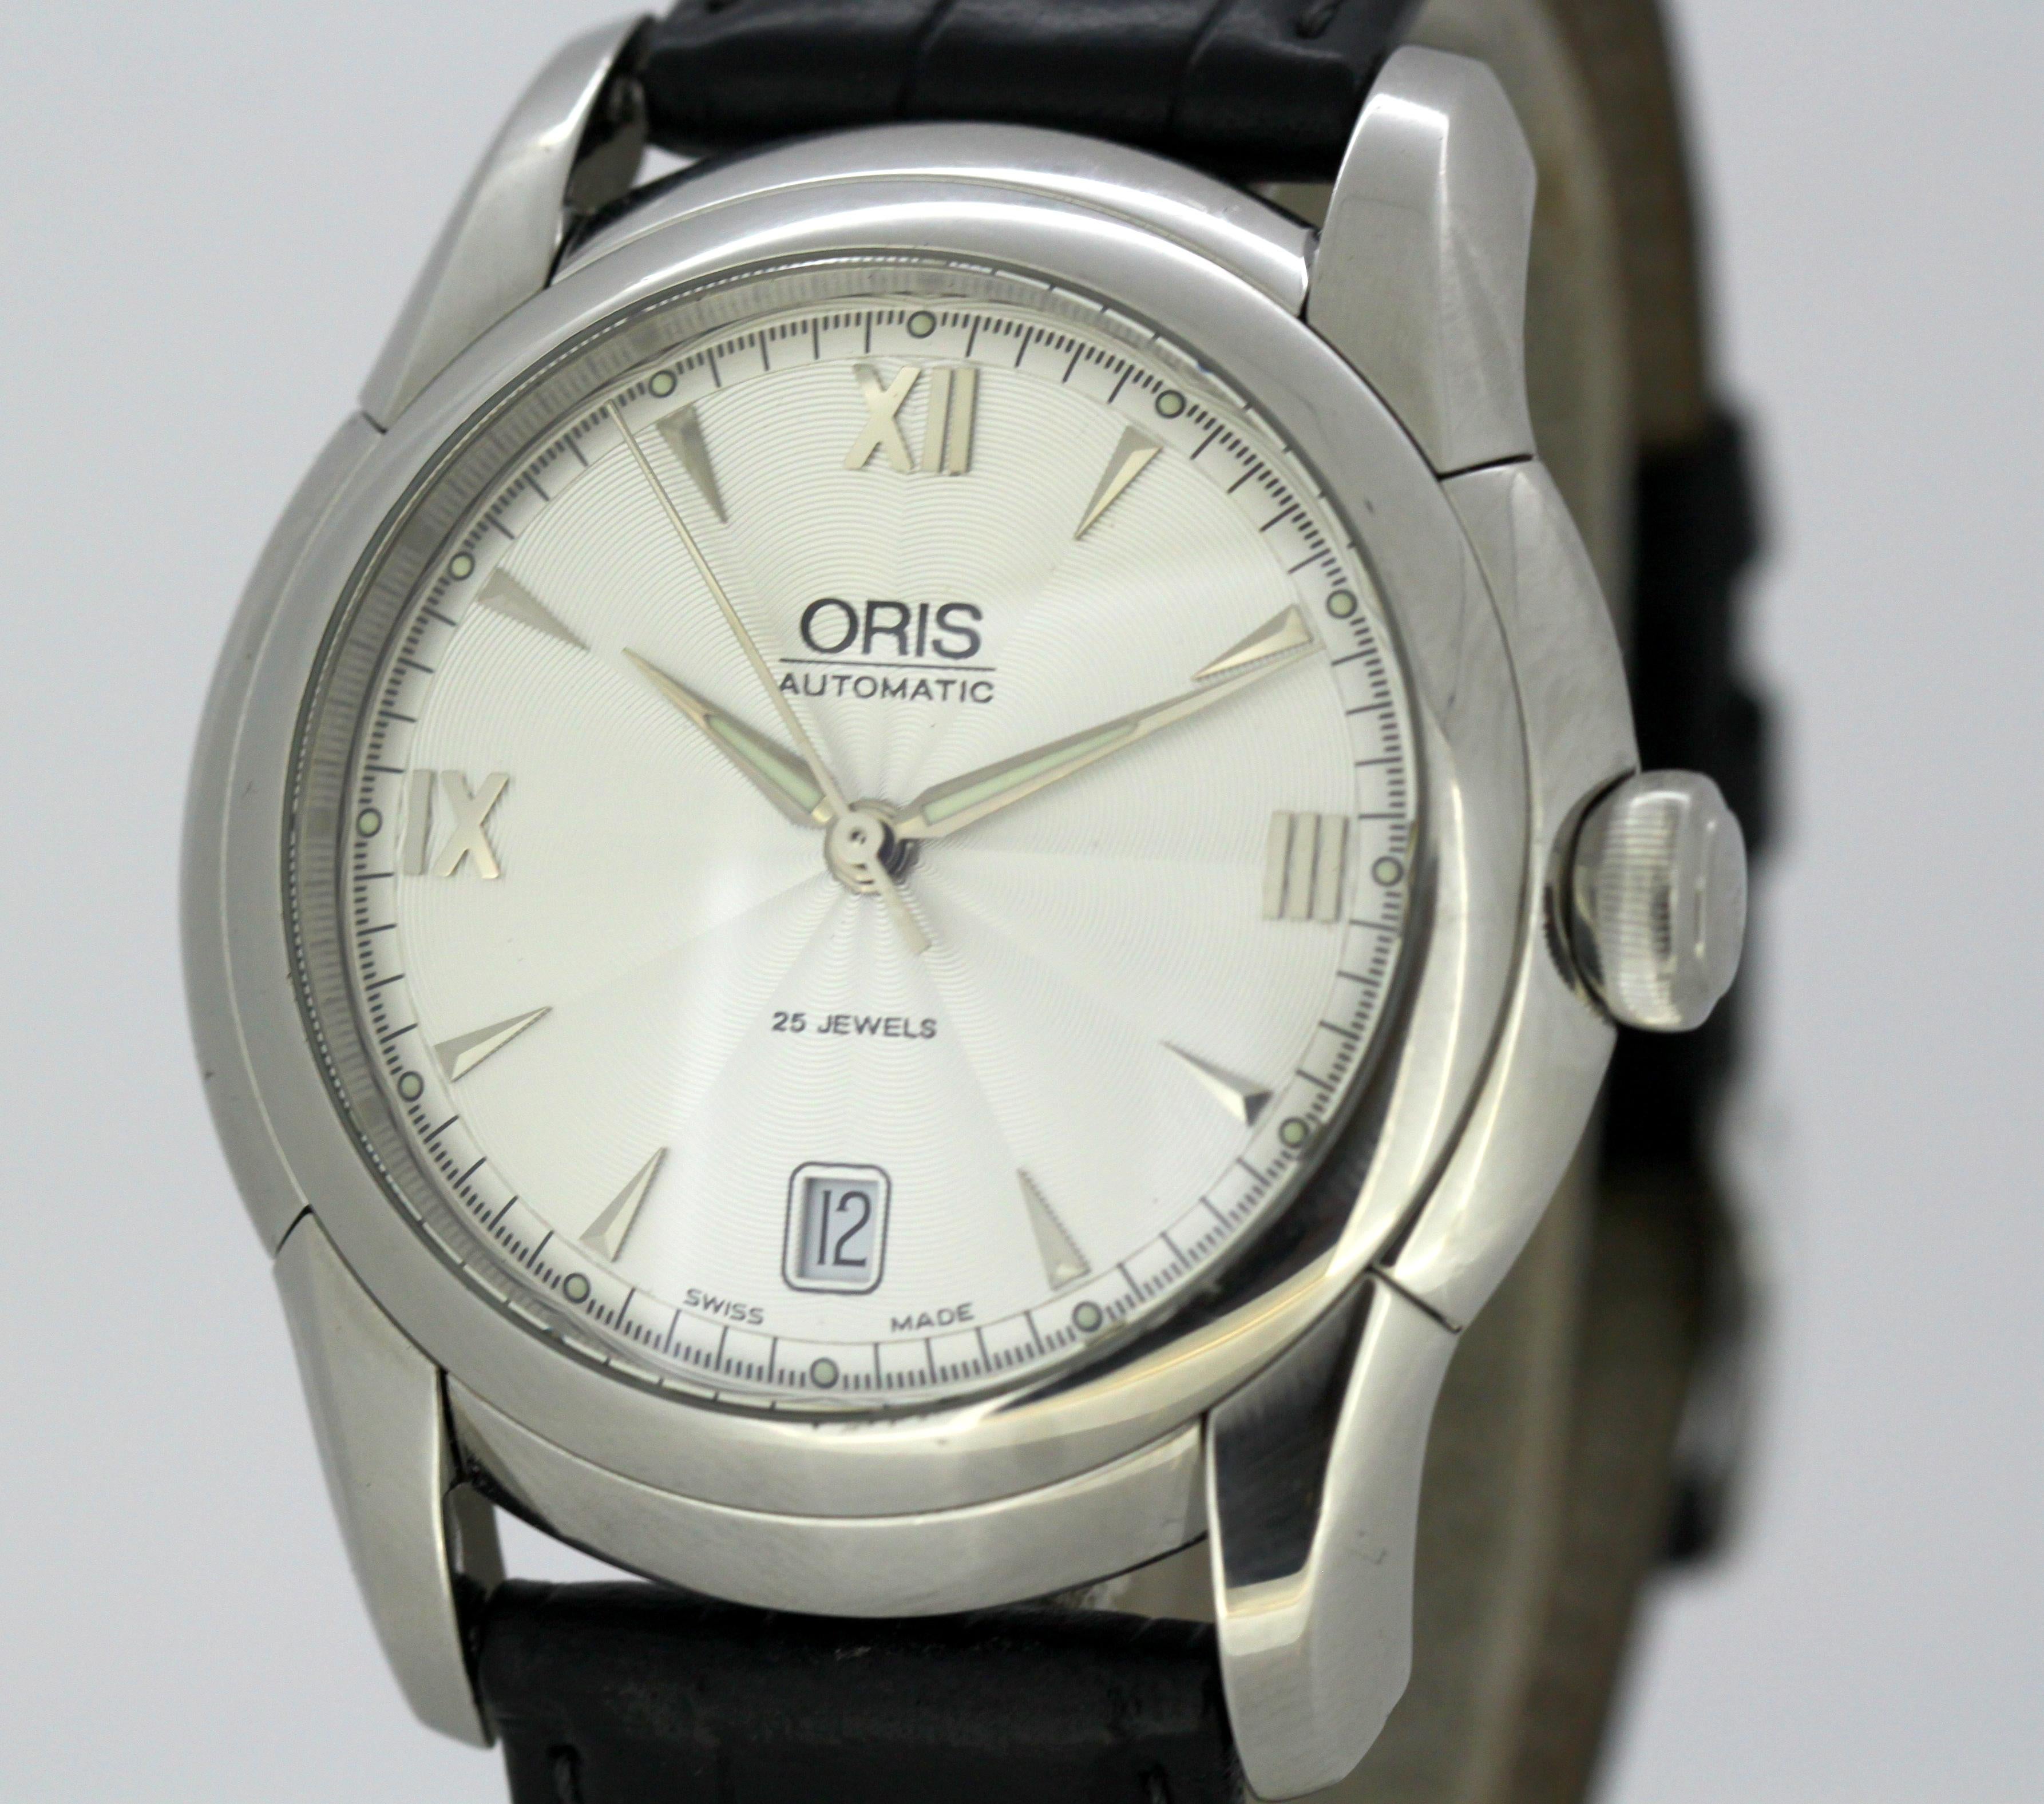 oris automatic 25 jewels watch constantine